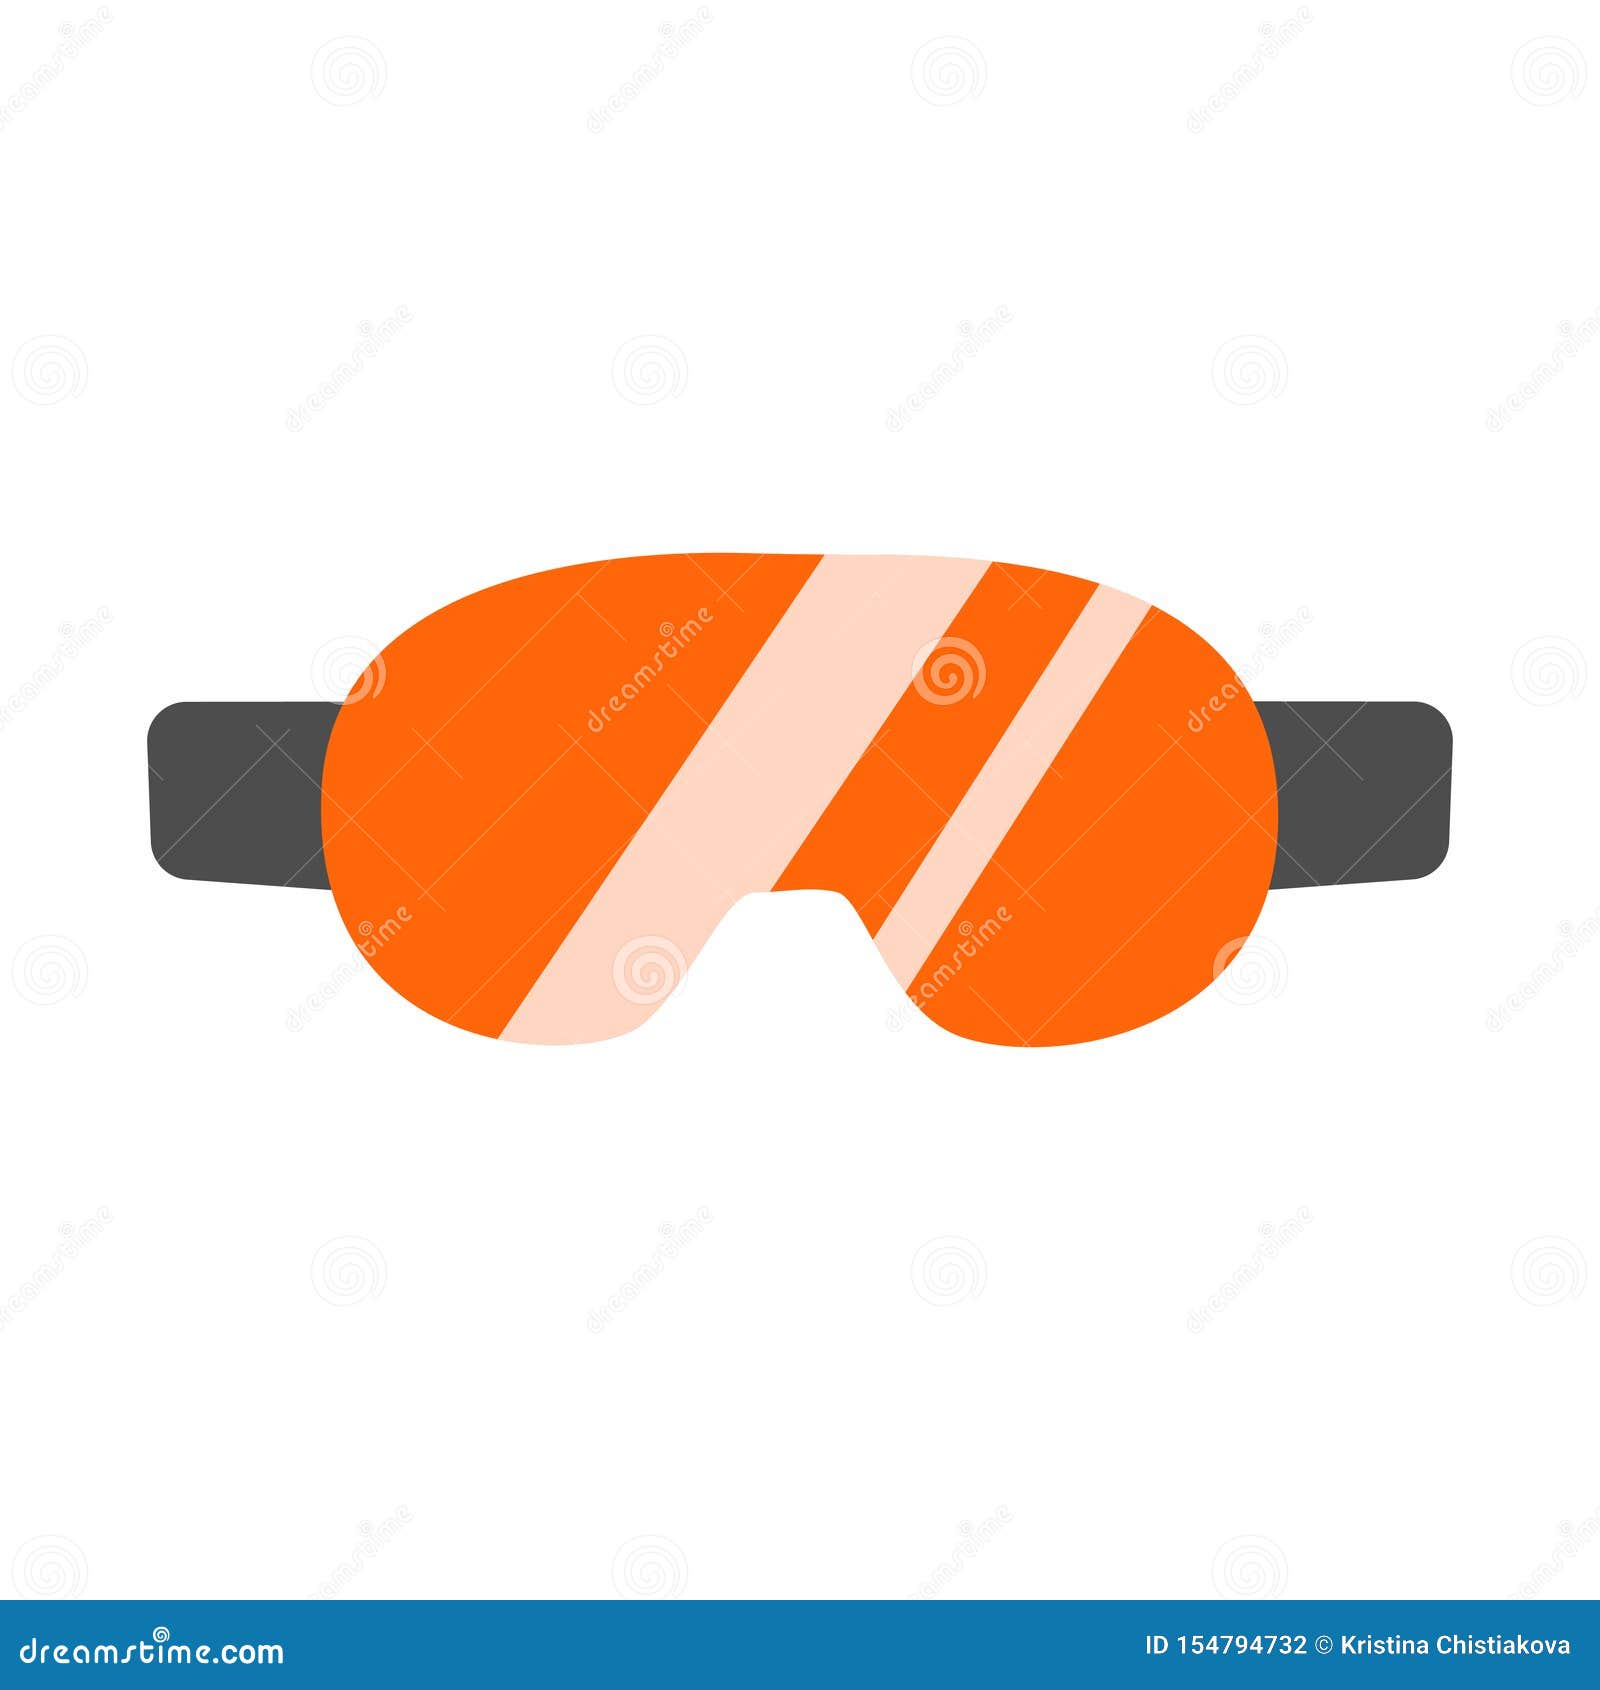 Flat Ski Goggles Icon with Orange Lens Stock Vector - Illustration of ...